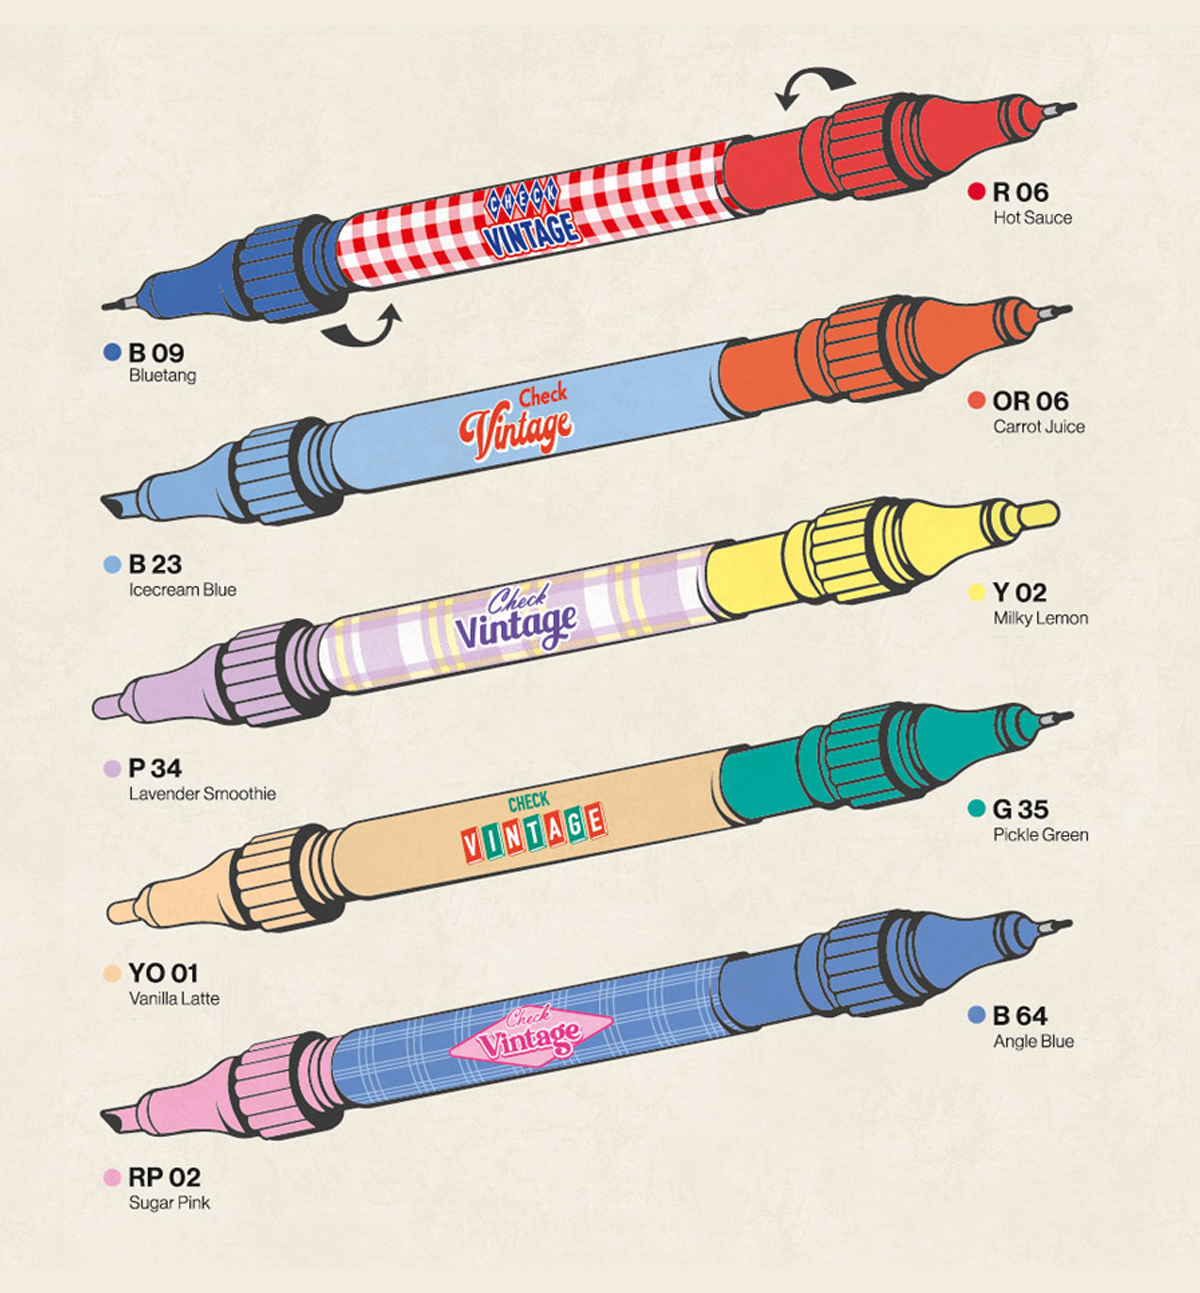 Live Color DIY Check Vintage  Pens [Limited Edition]